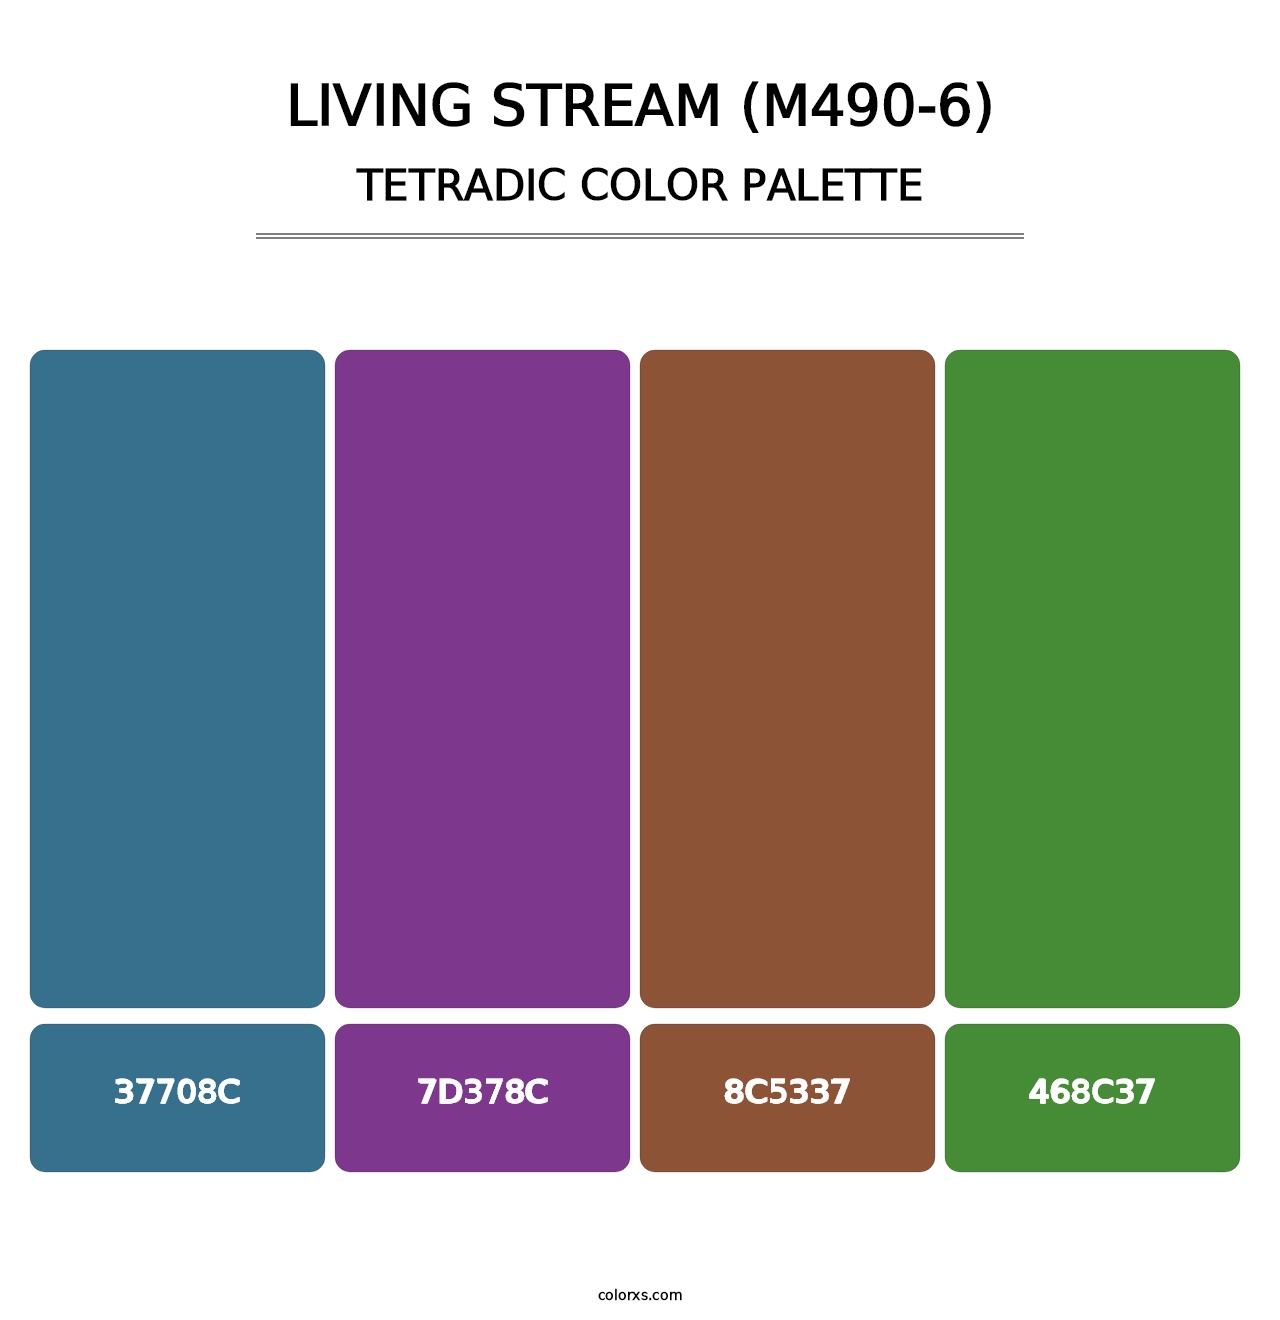 Living Stream (M490-6) - Tetradic Color Palette